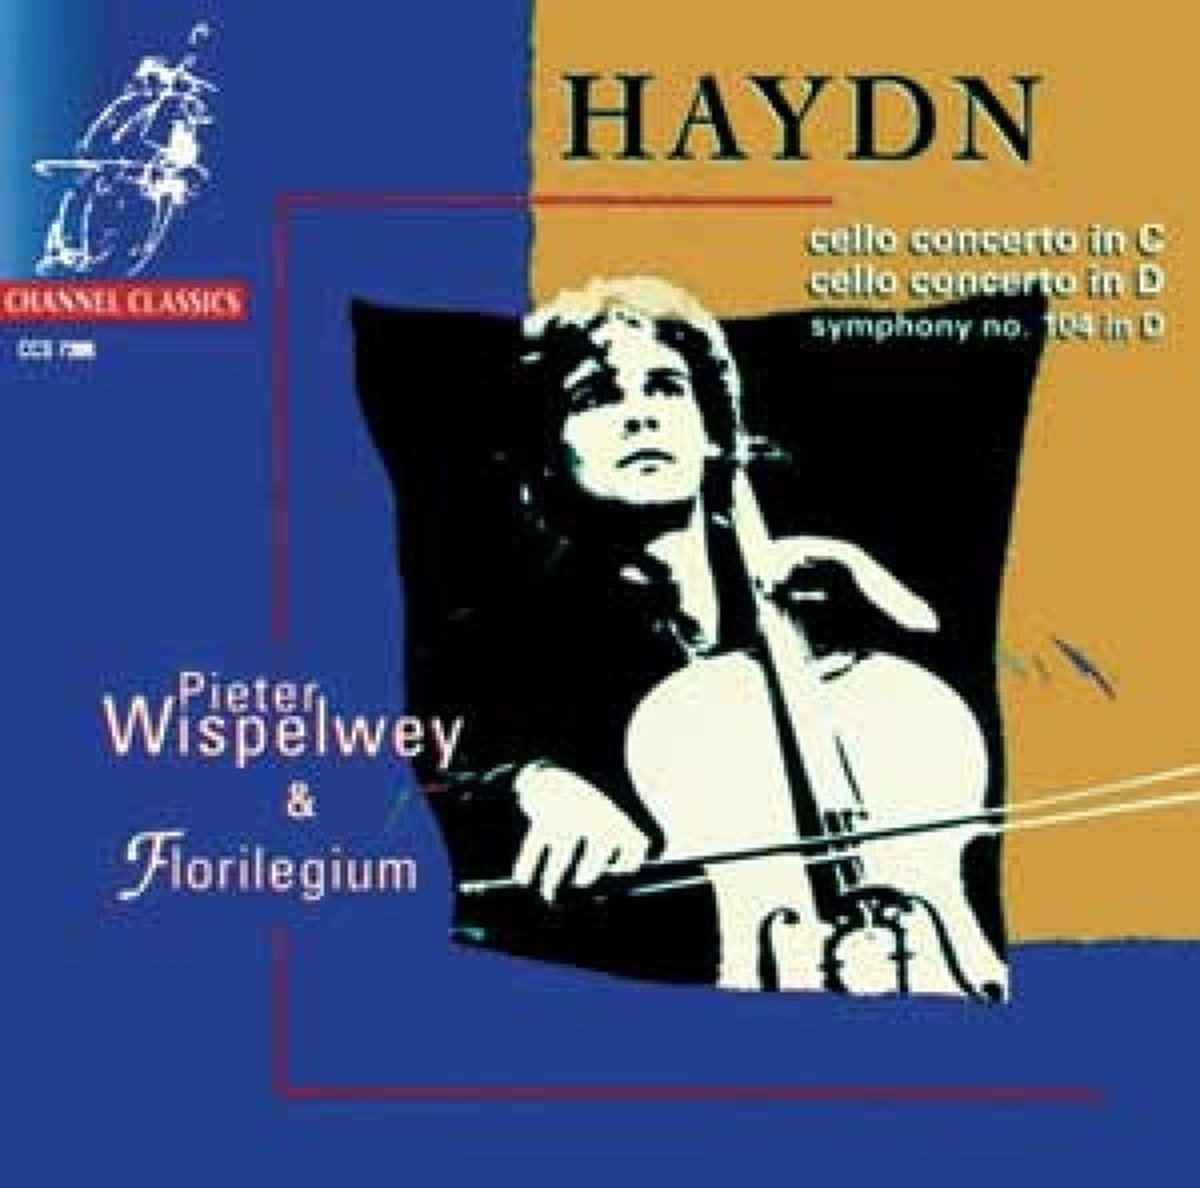 Pieter Wispelwey & Florilegium - Haydn: Cello Concertos In C And D (CD) - Pieter Wispelwey & Florilegium